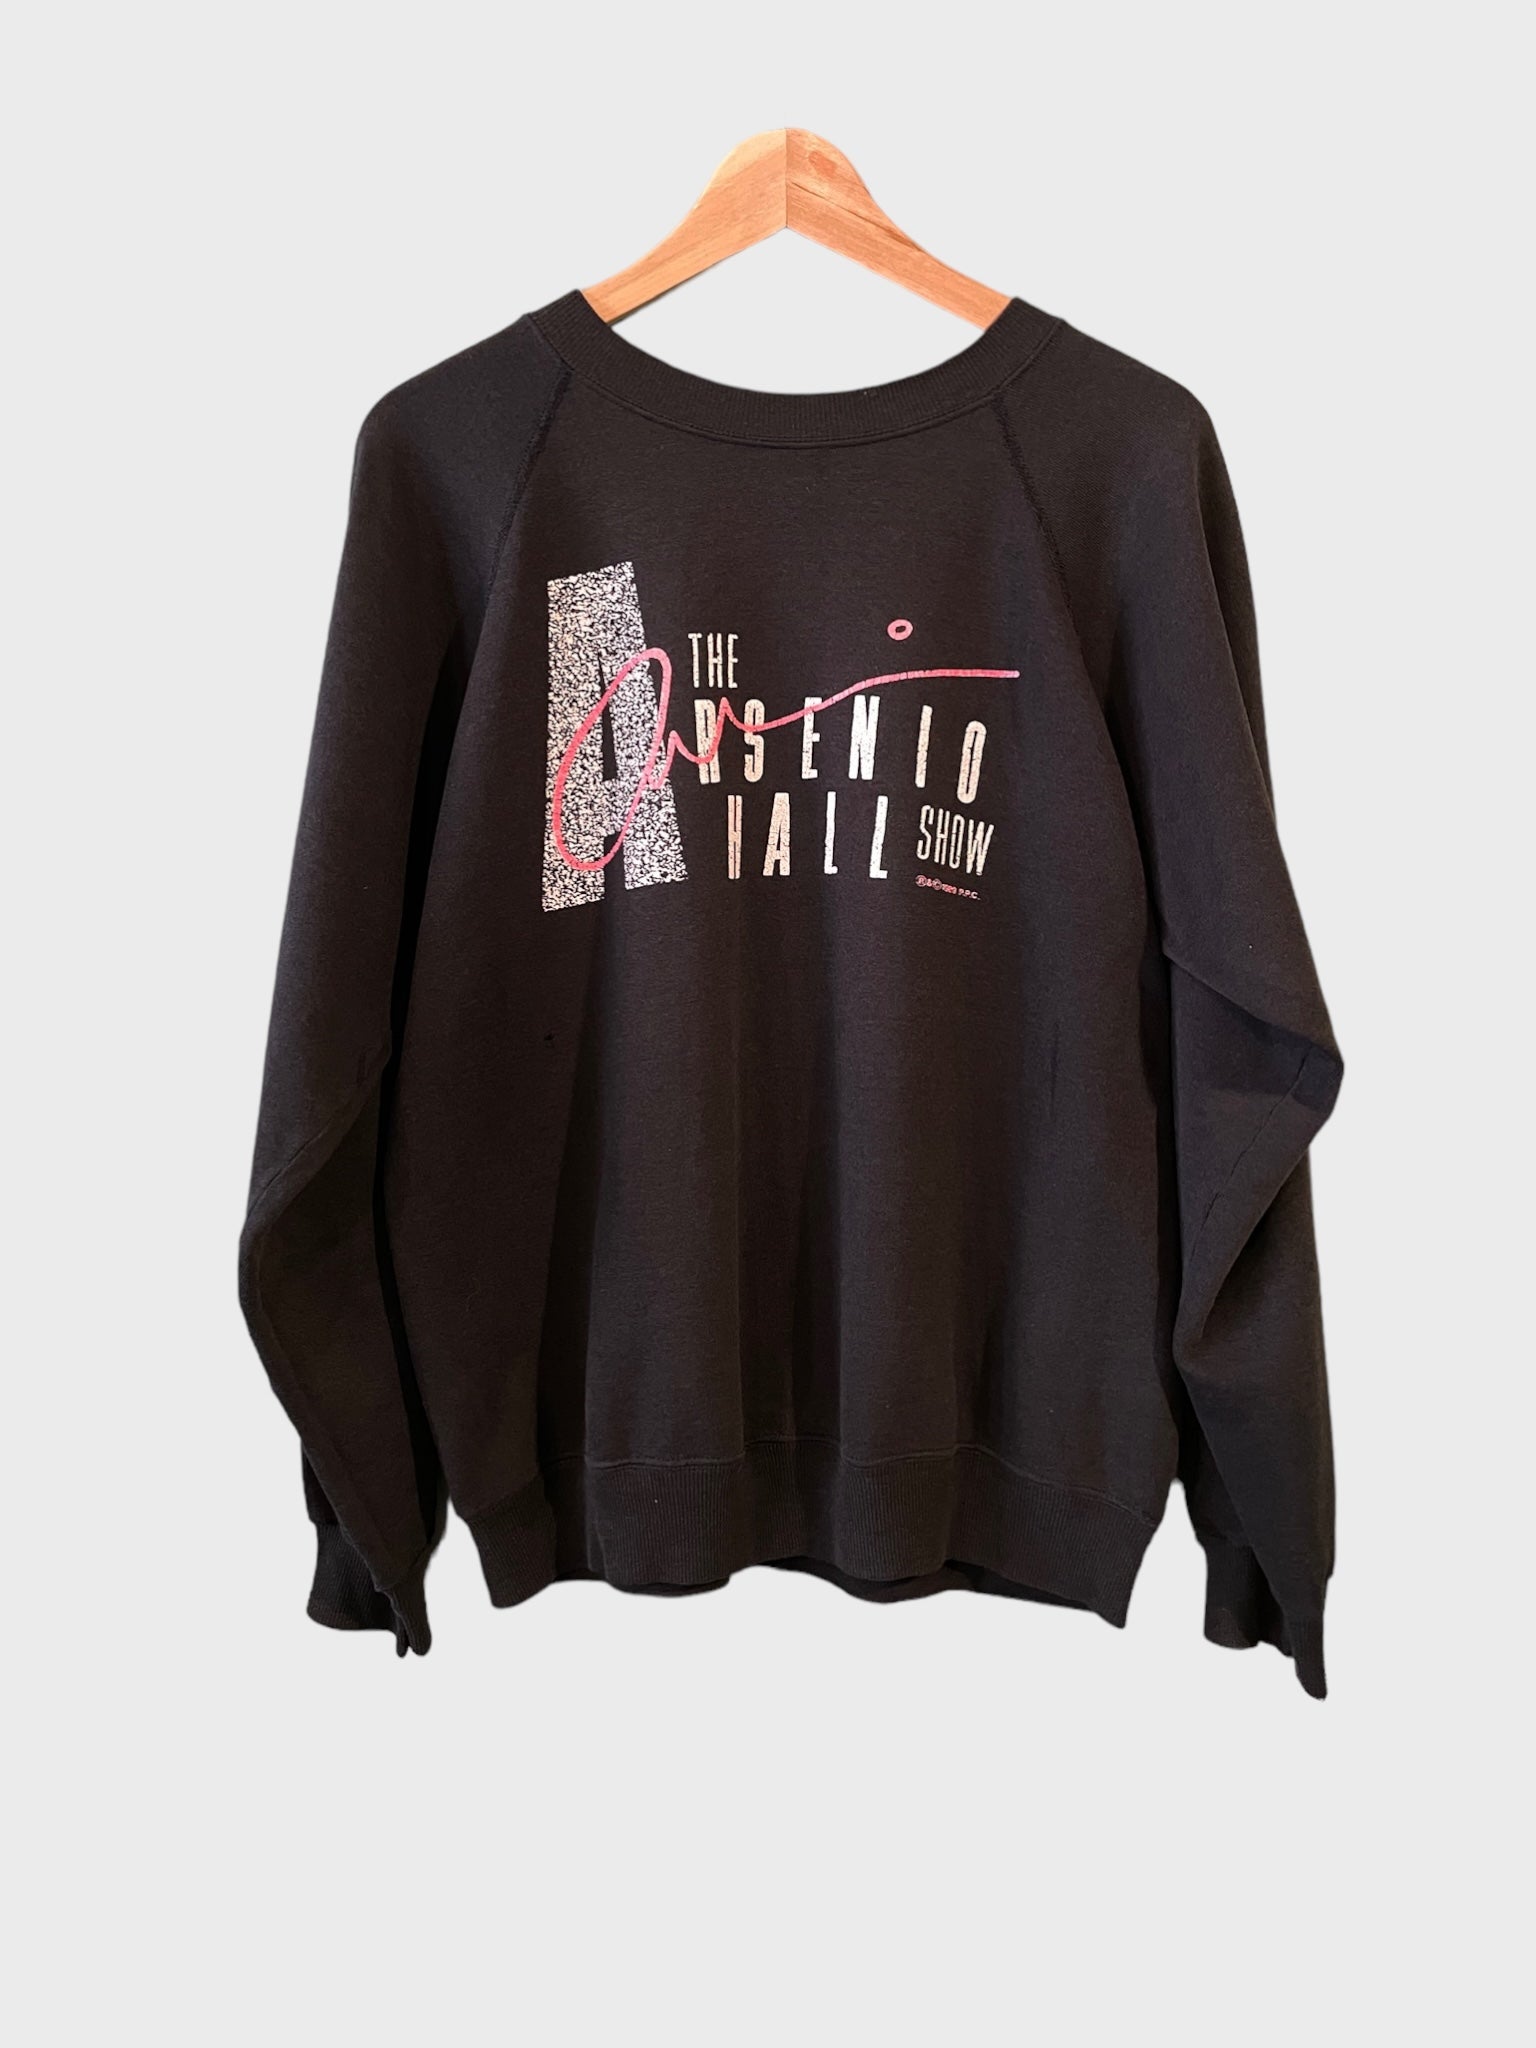 Vintage The Arsenio Hall Show Sweatshirt Rare